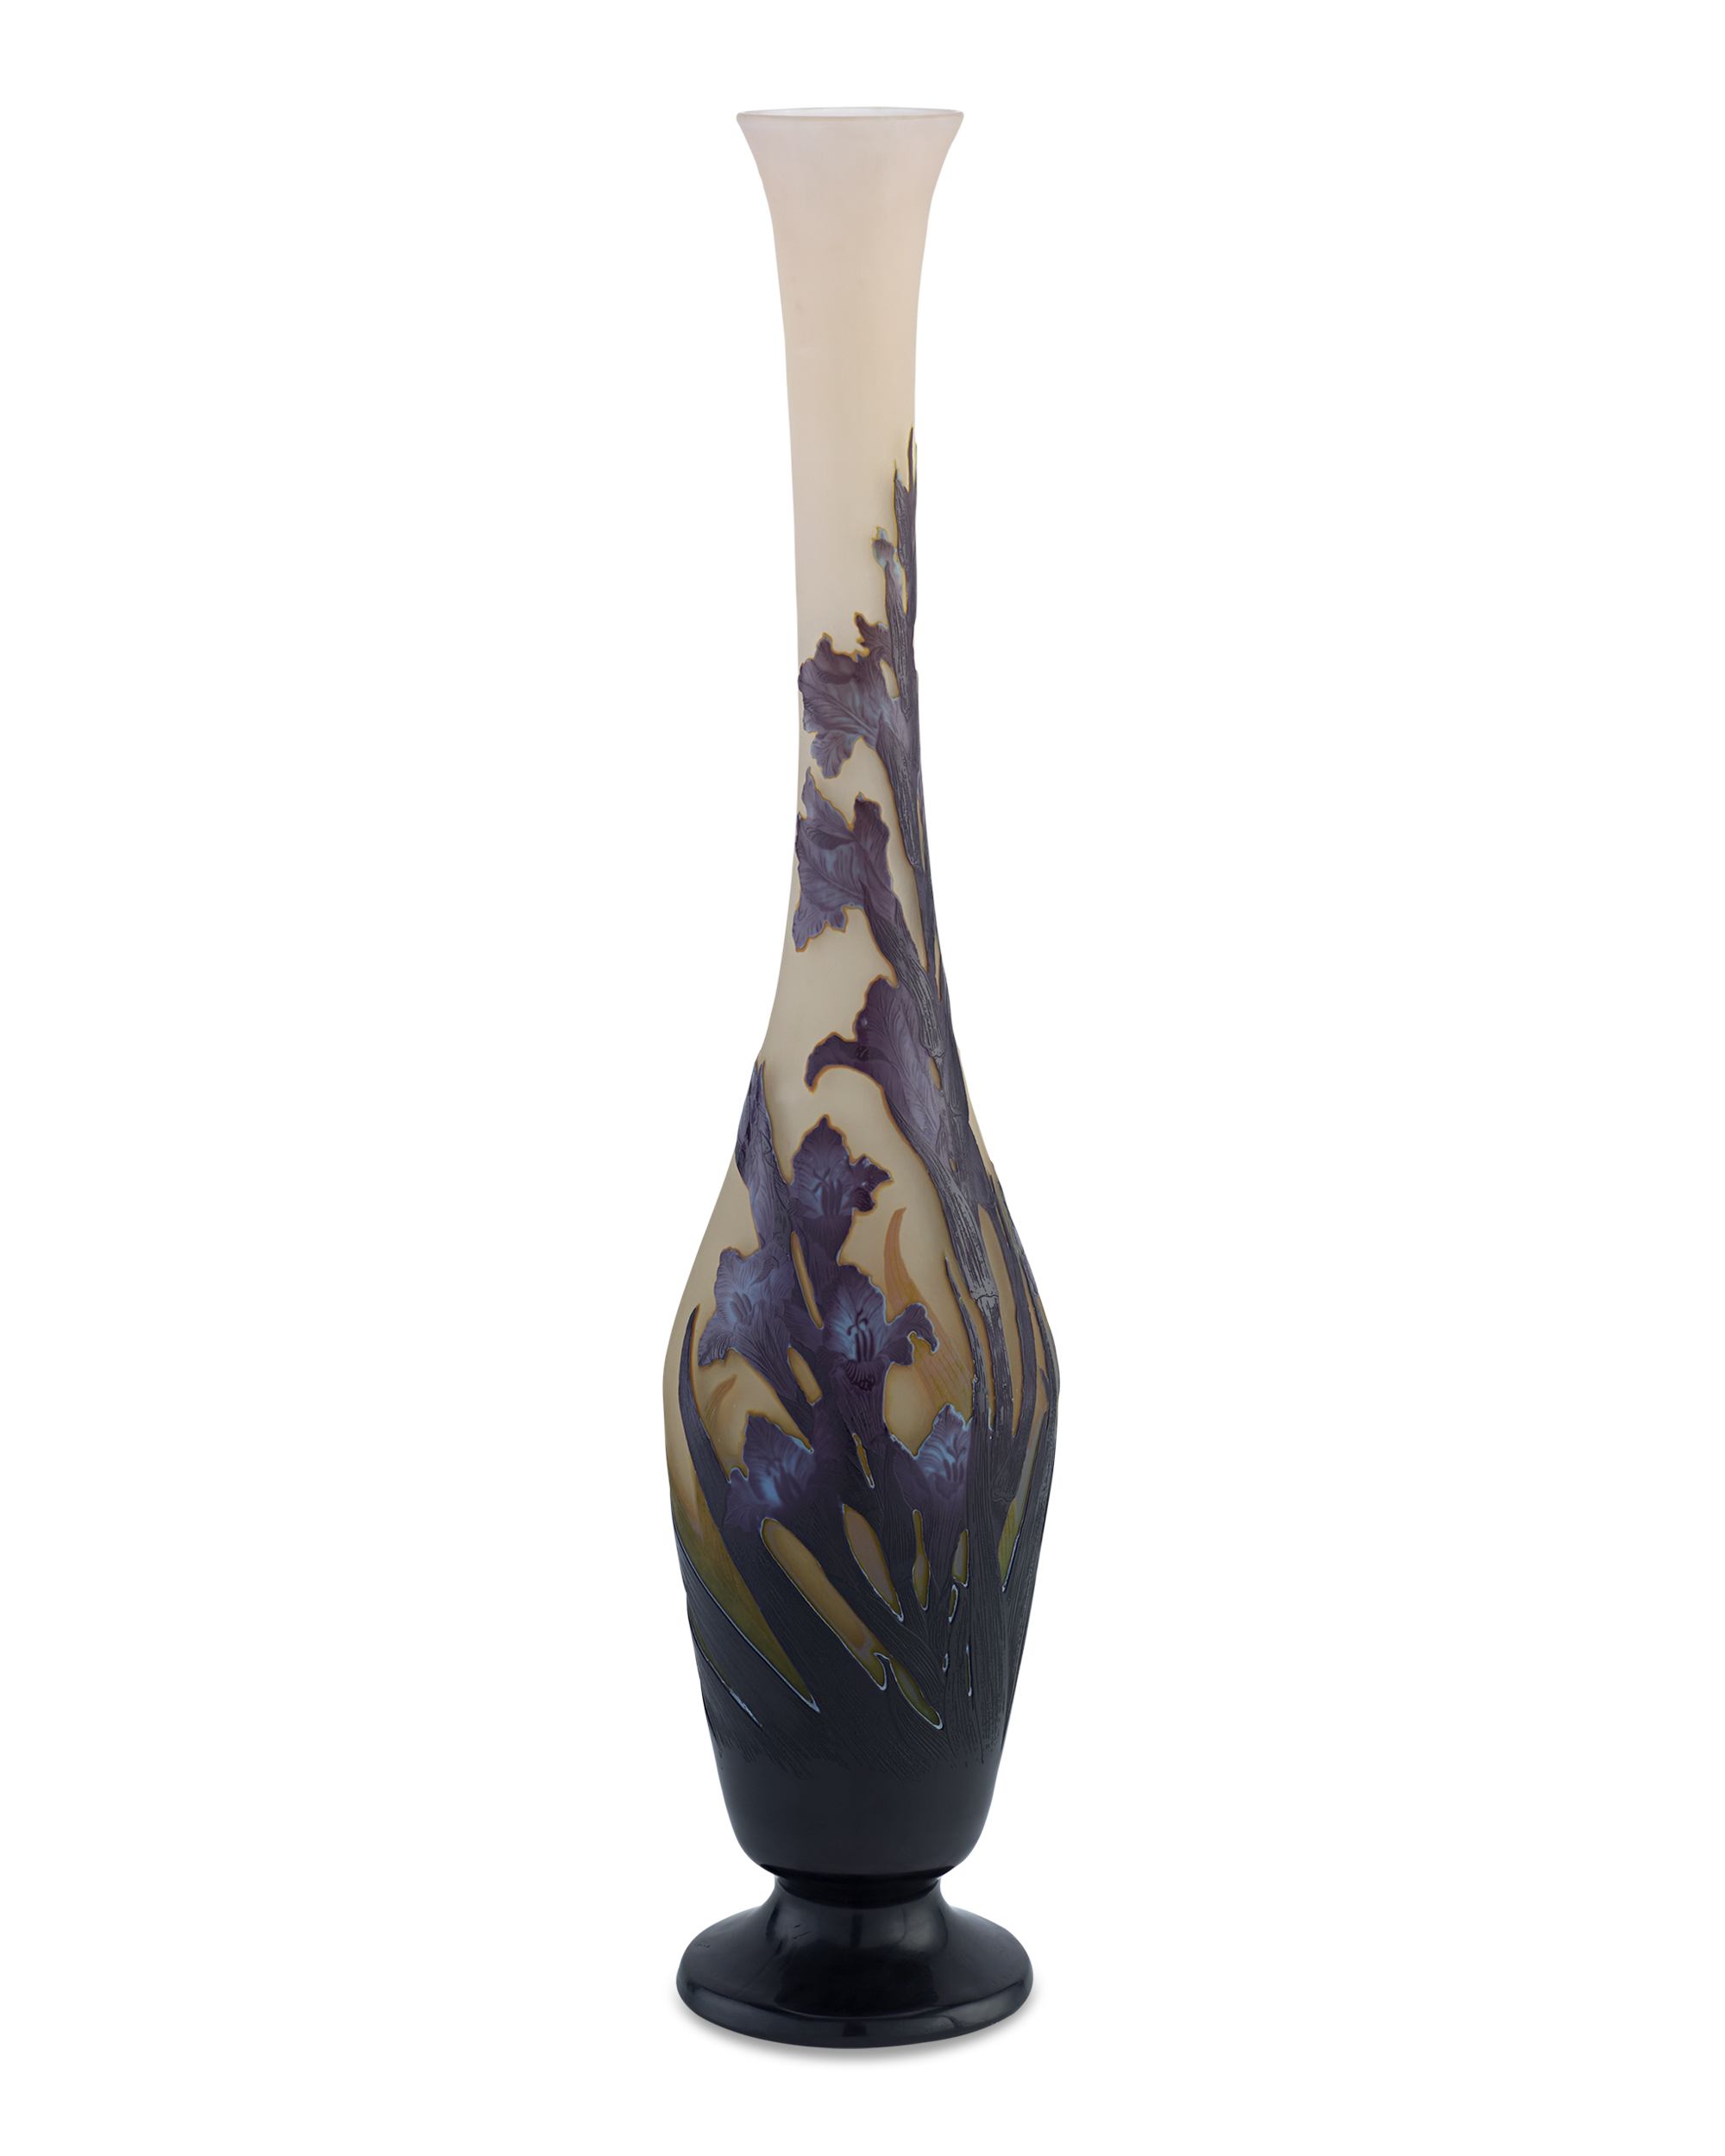 Cameo Glass Vase by Émile Gallé